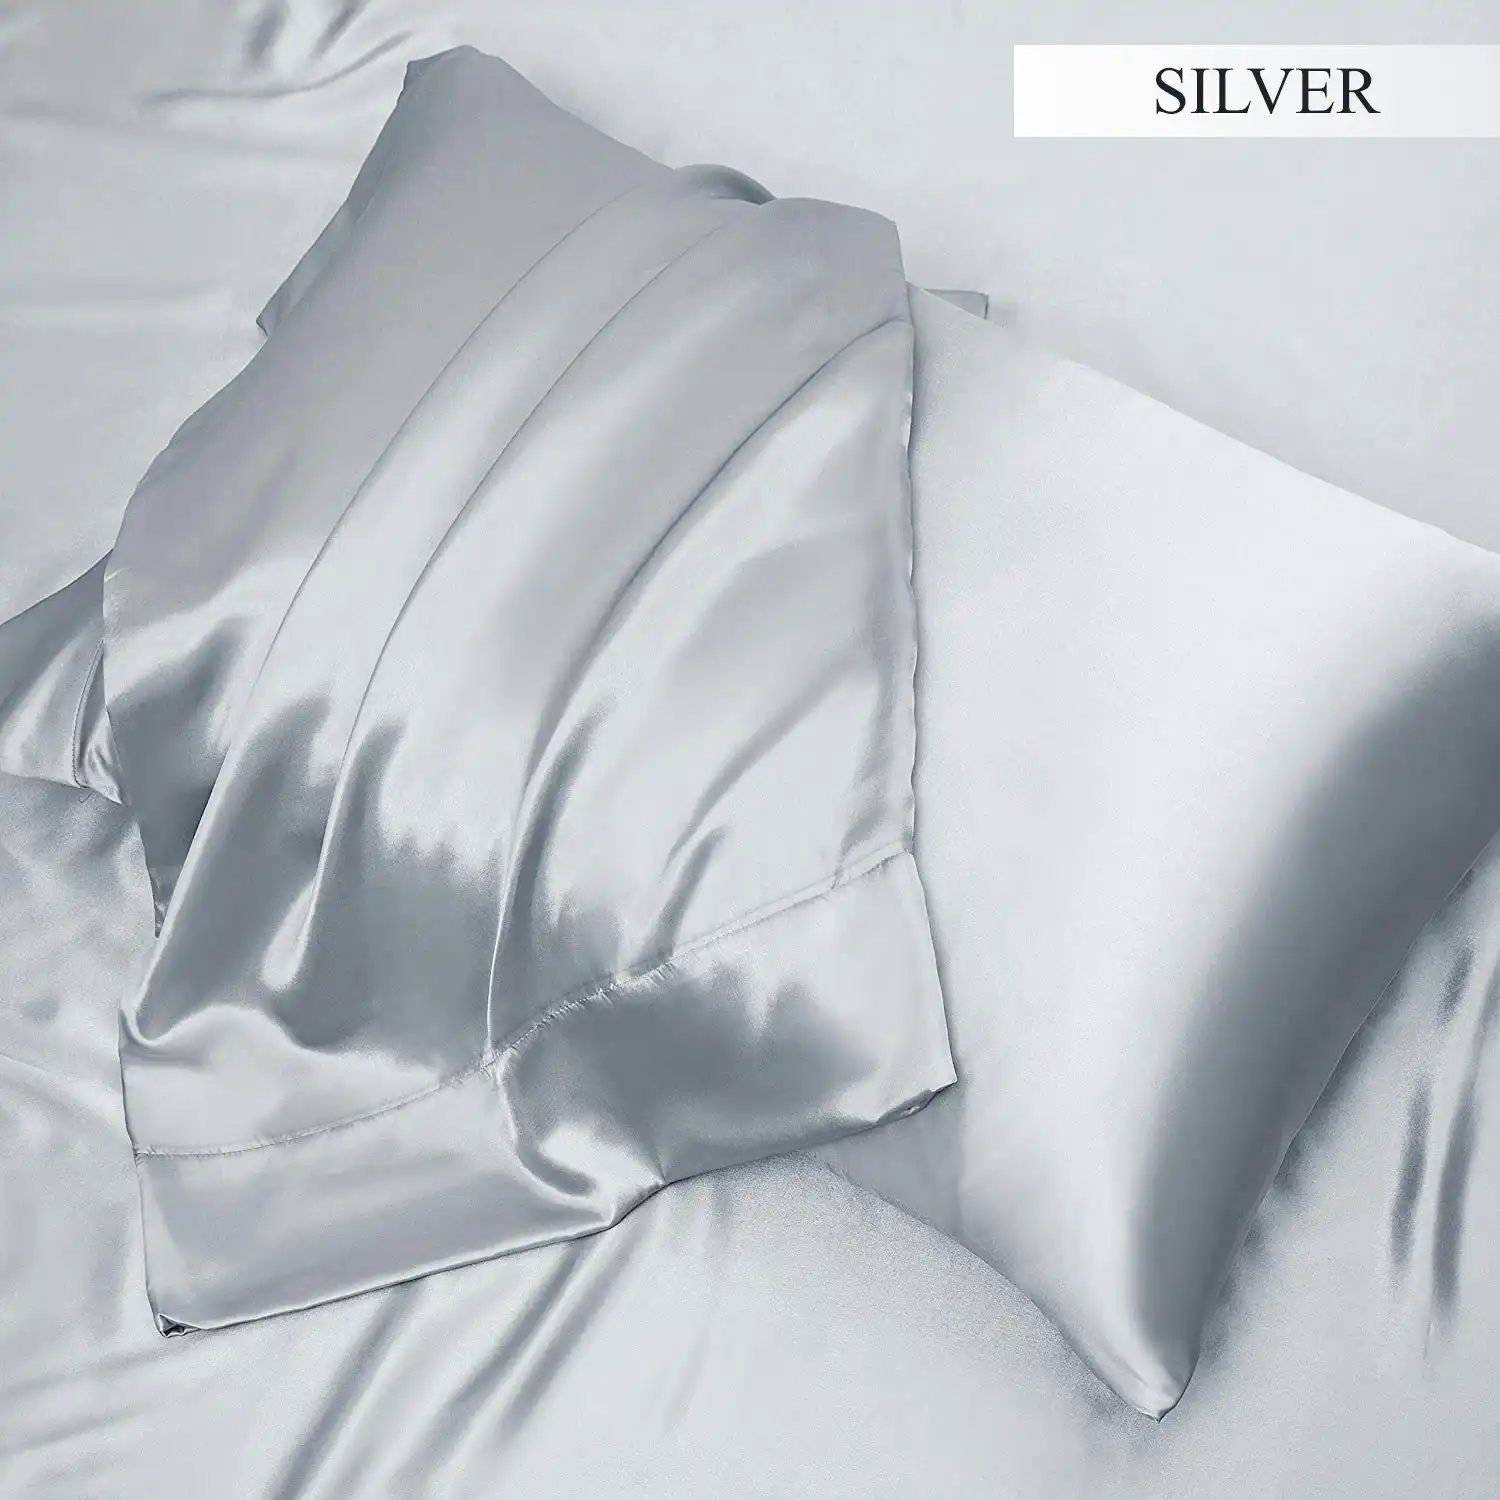 Ramesses Casablanca Ultra-Soft Silky Pillowcase Twin Pack